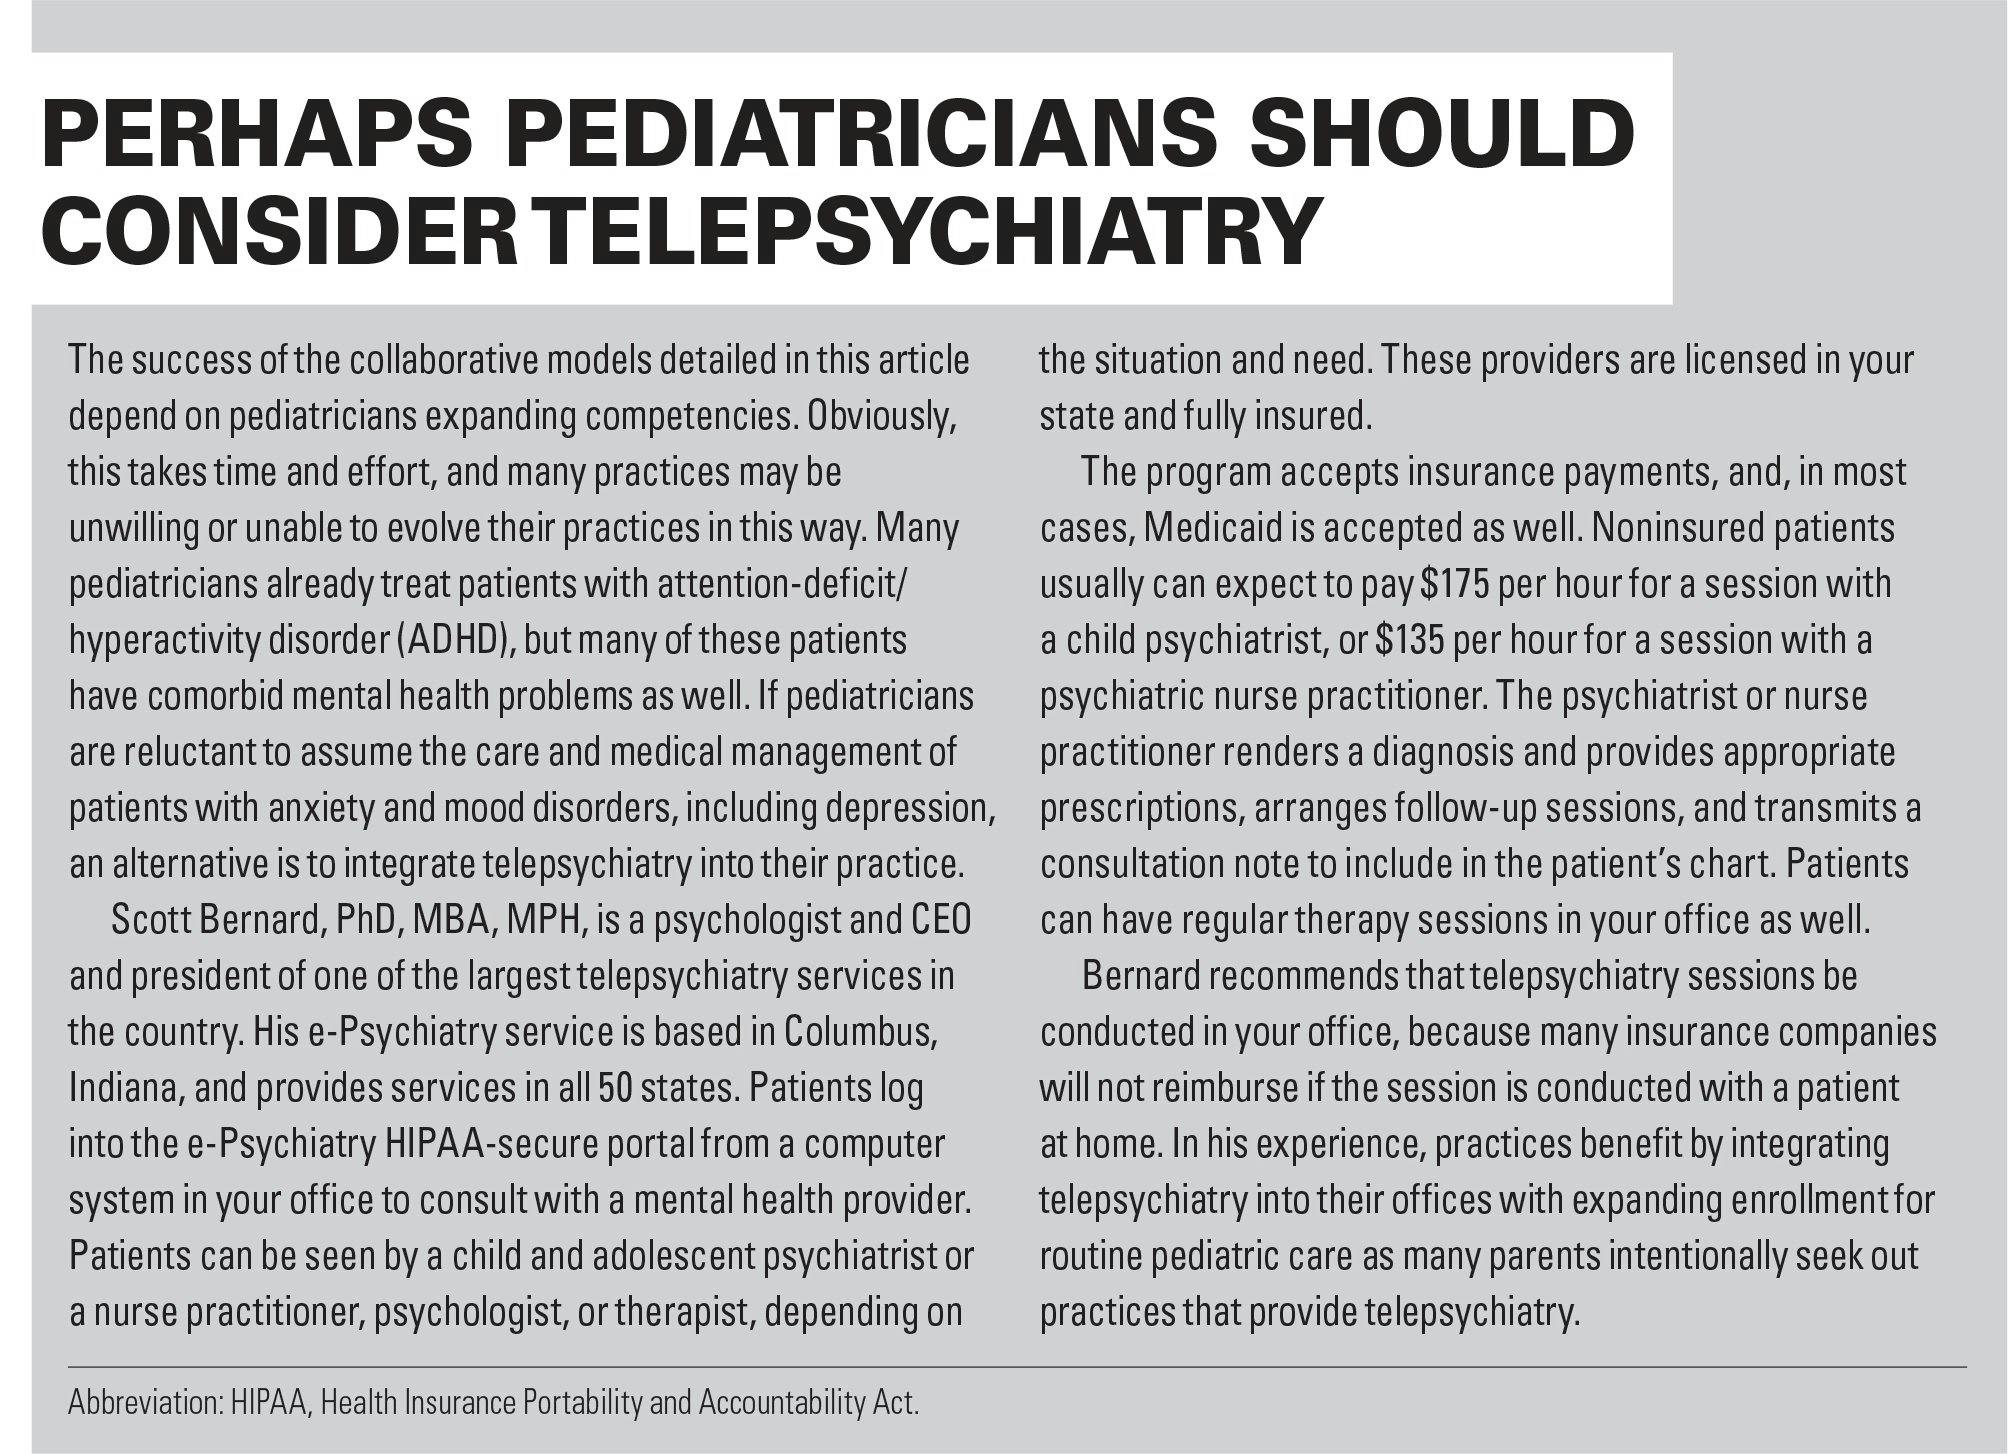 Perhaps pediatricians should consider telepsychiatry